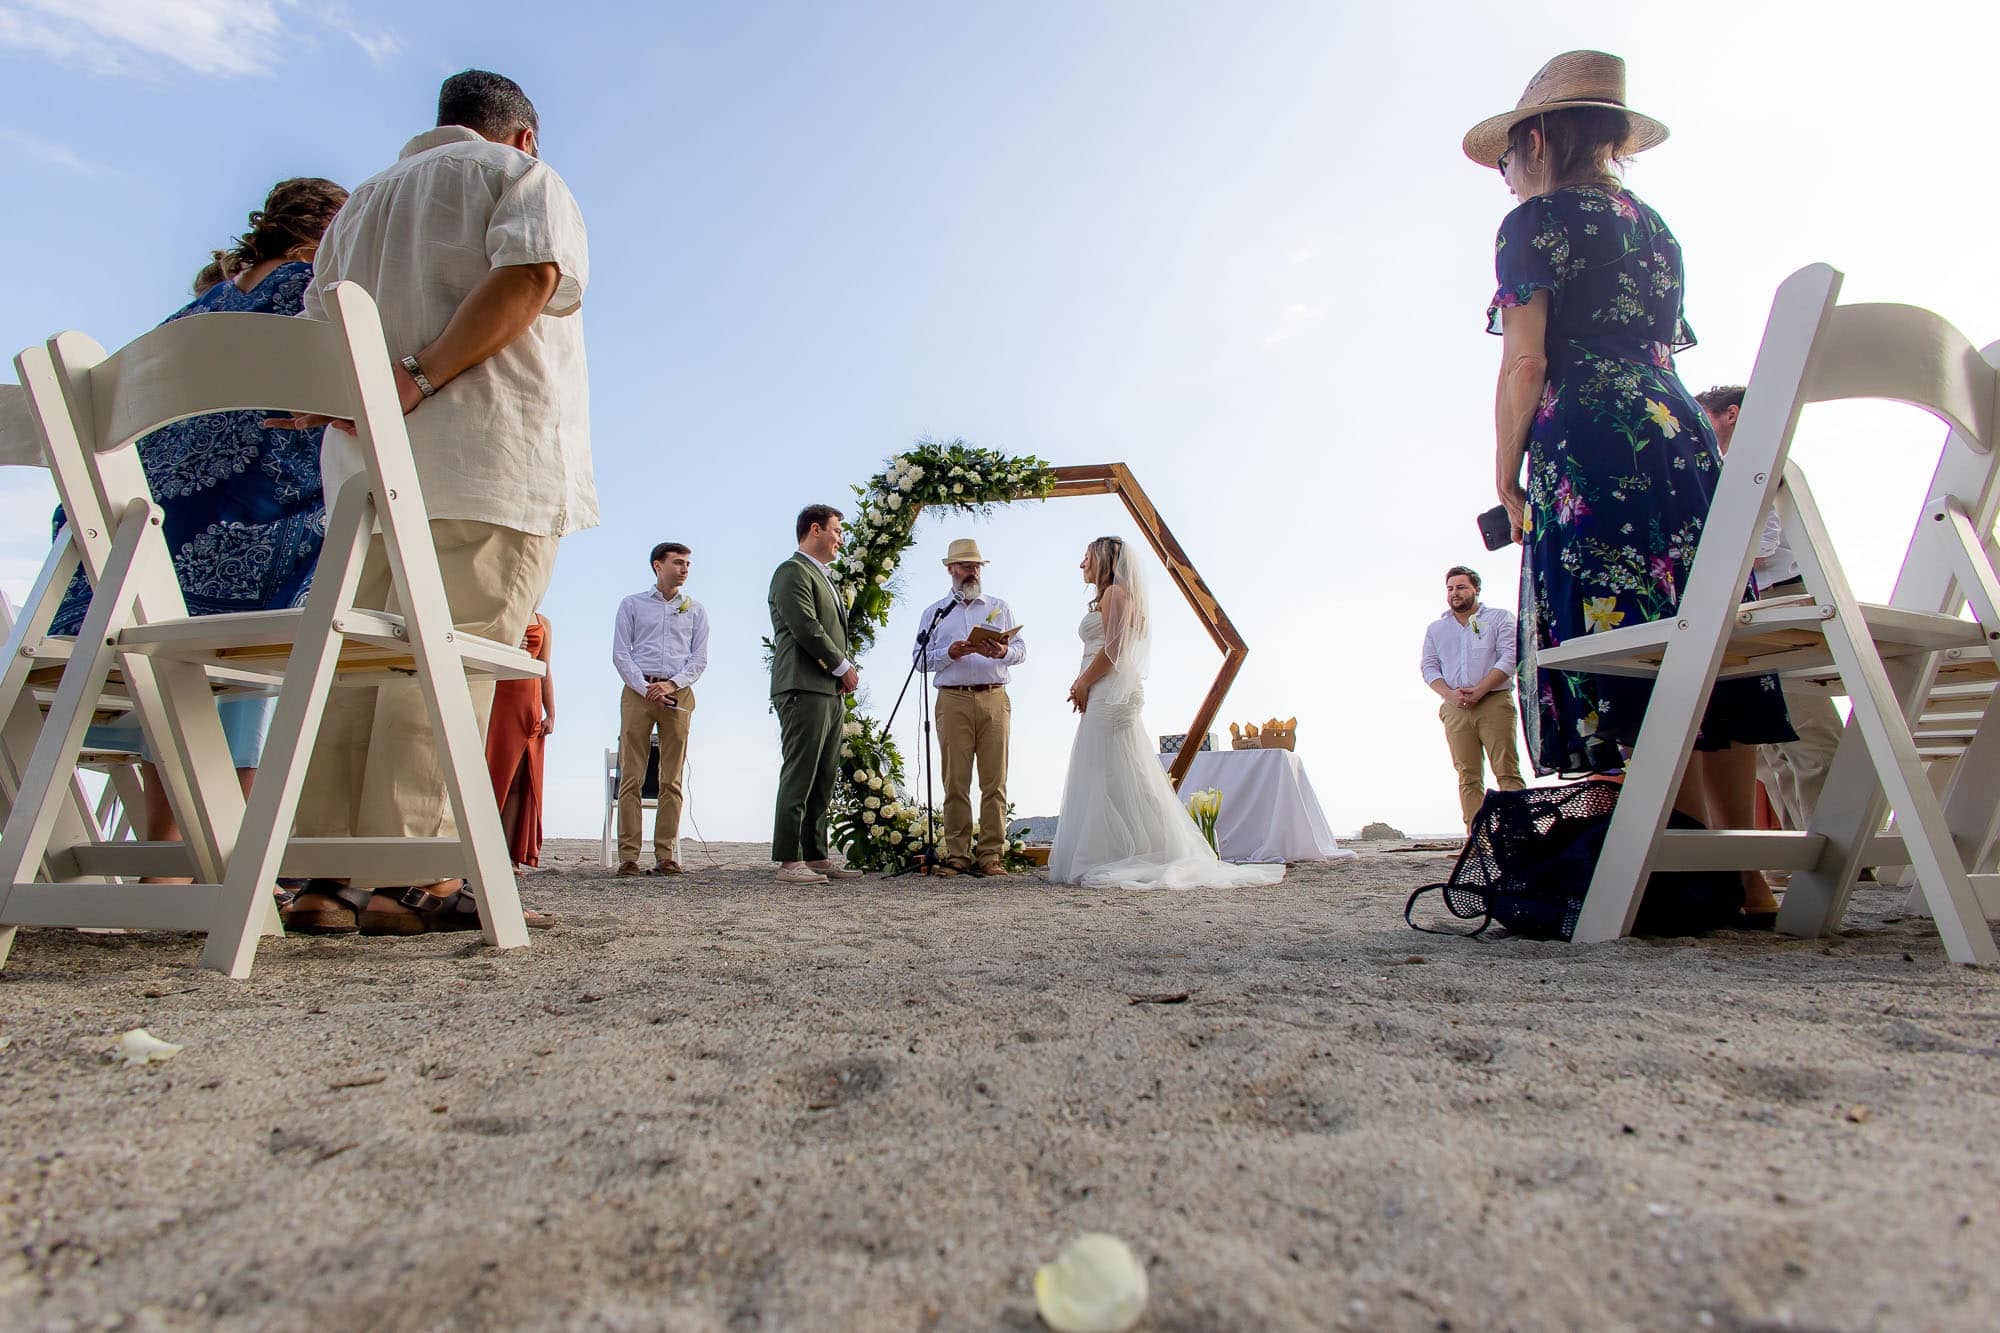 Creating memories wedding ceremony on the beach